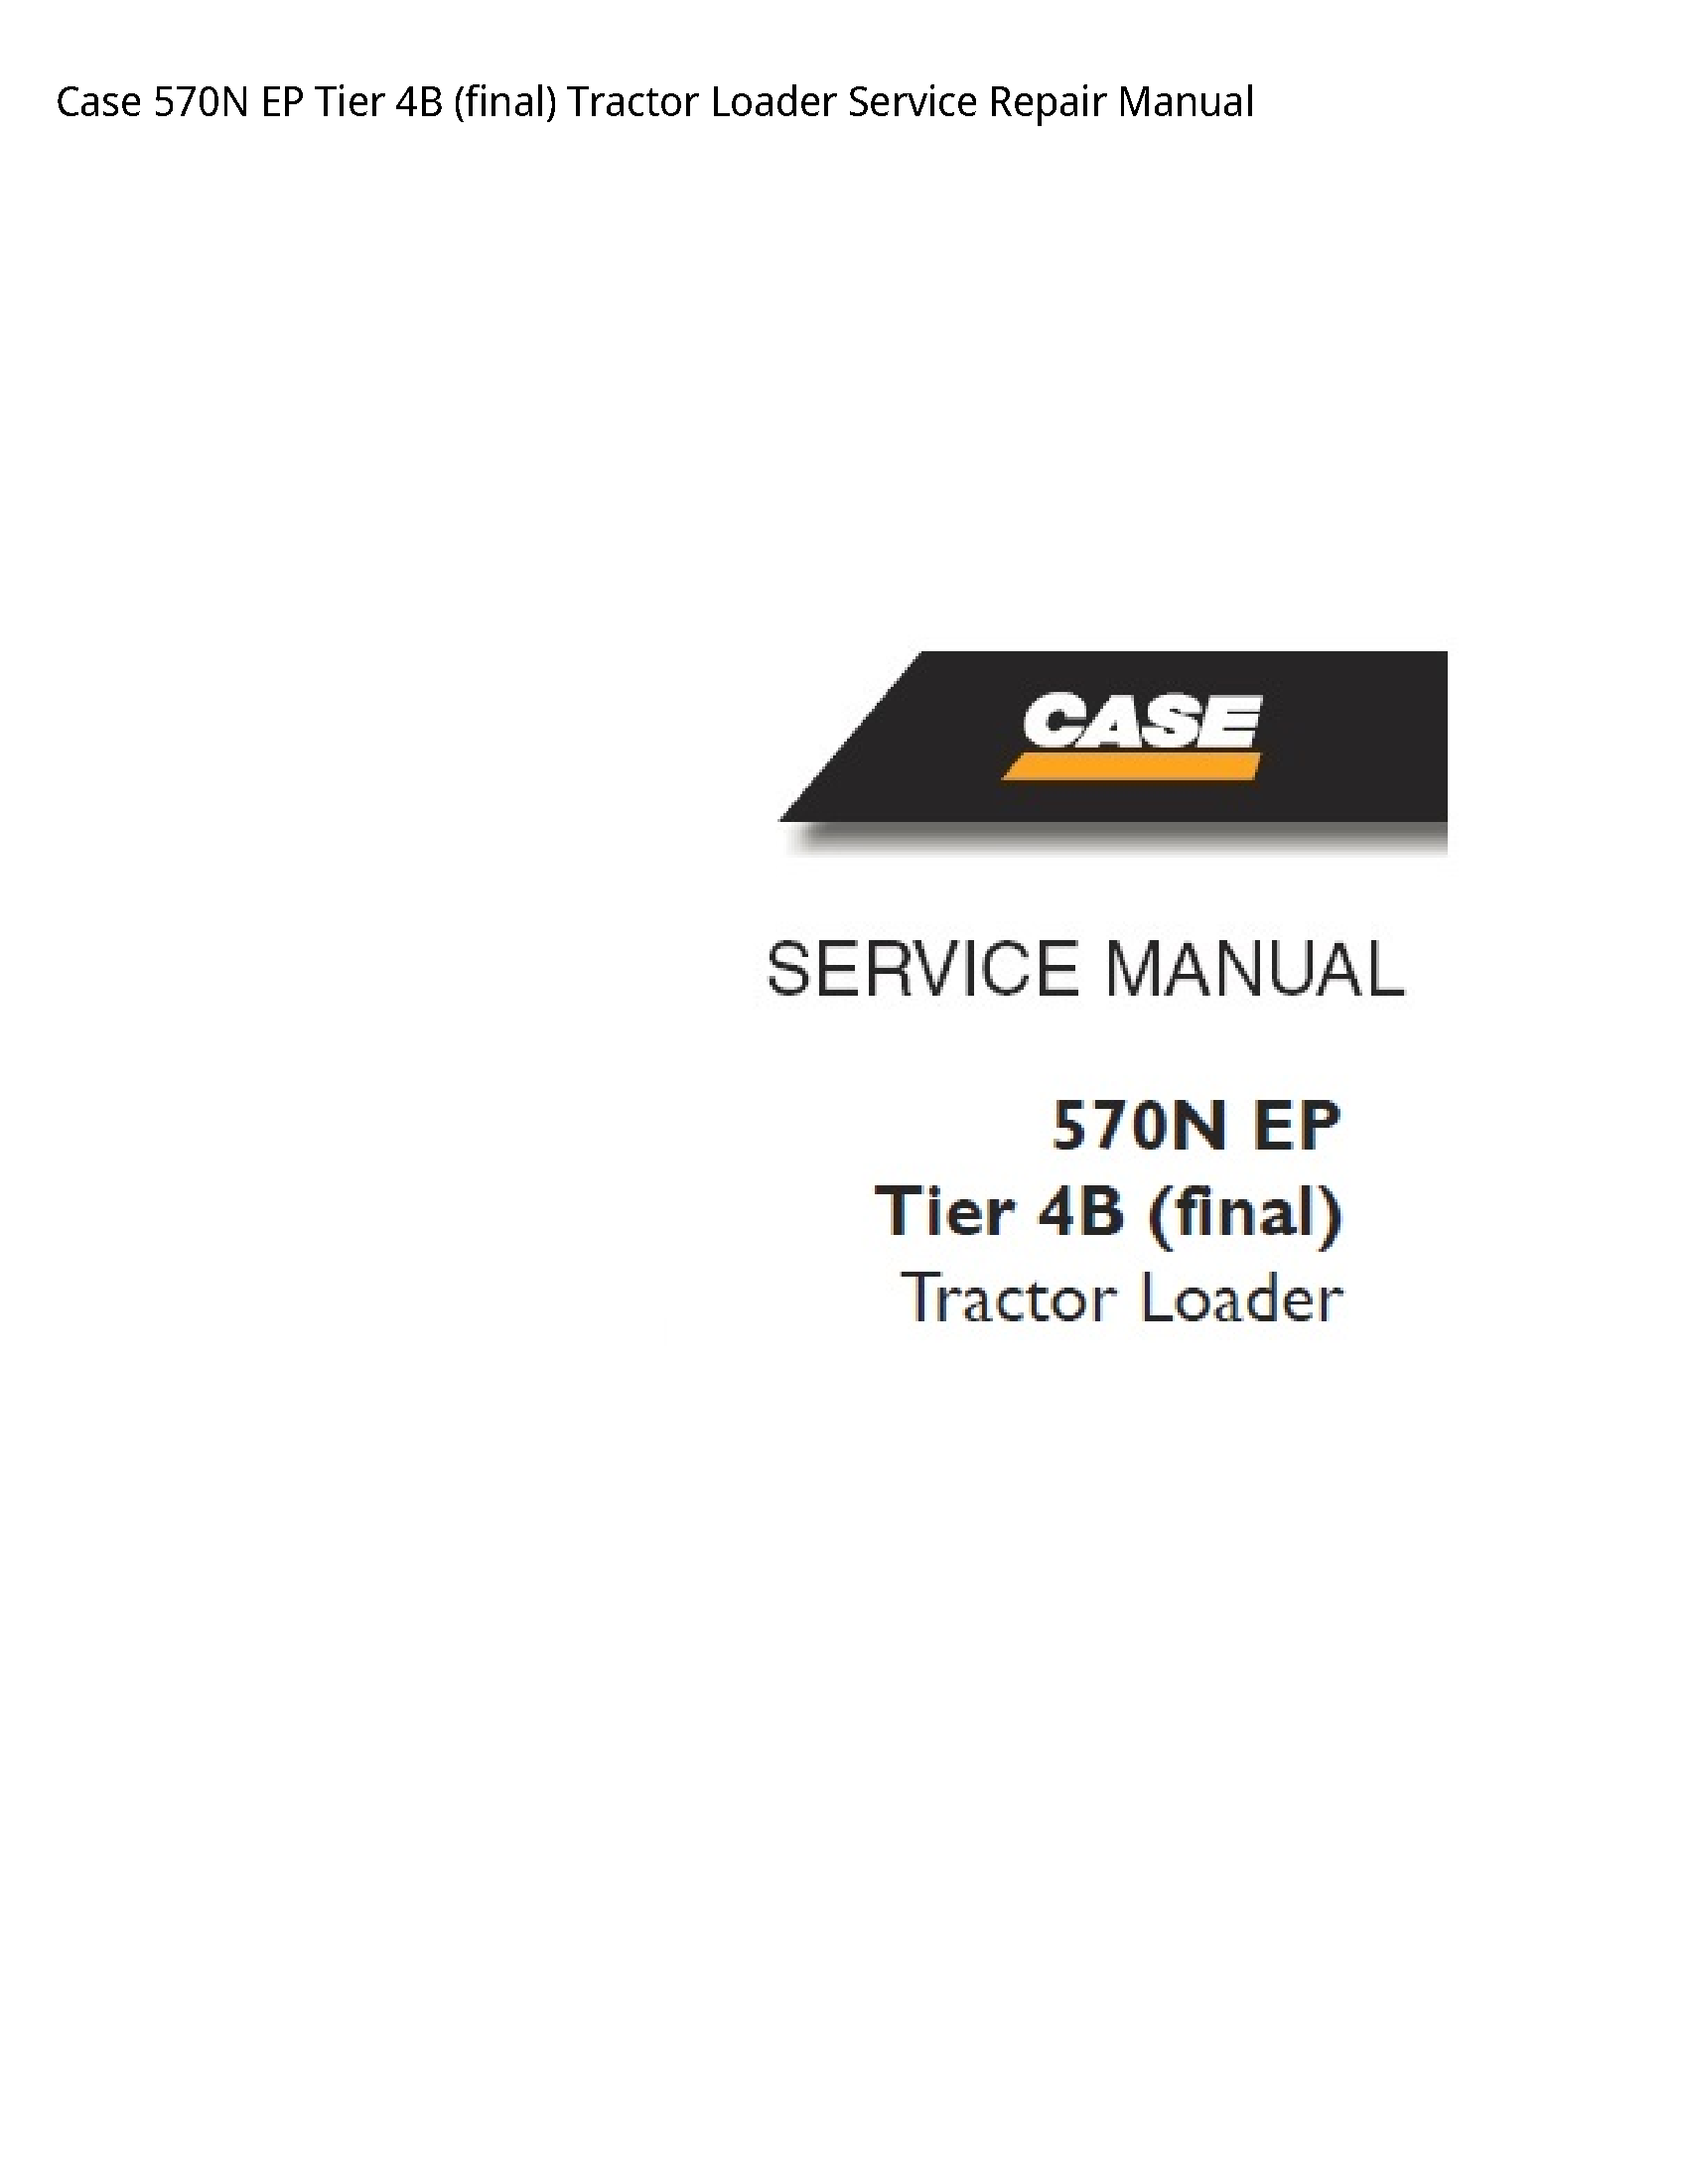 Case/Case IH 570N EP Tier (final) Tractor Loader manual